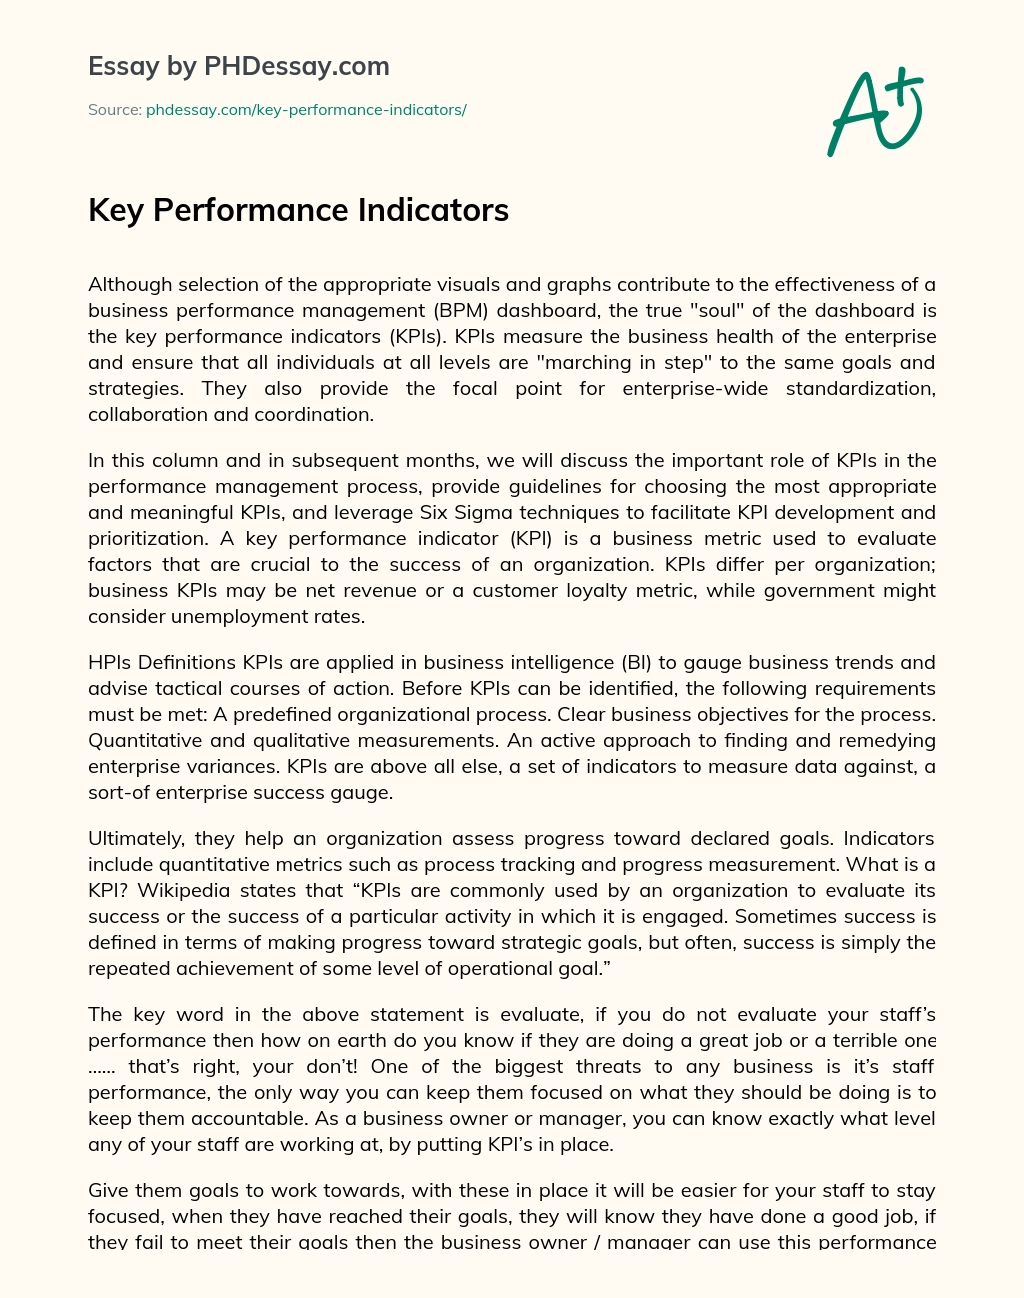 Key Performance Indicators essay